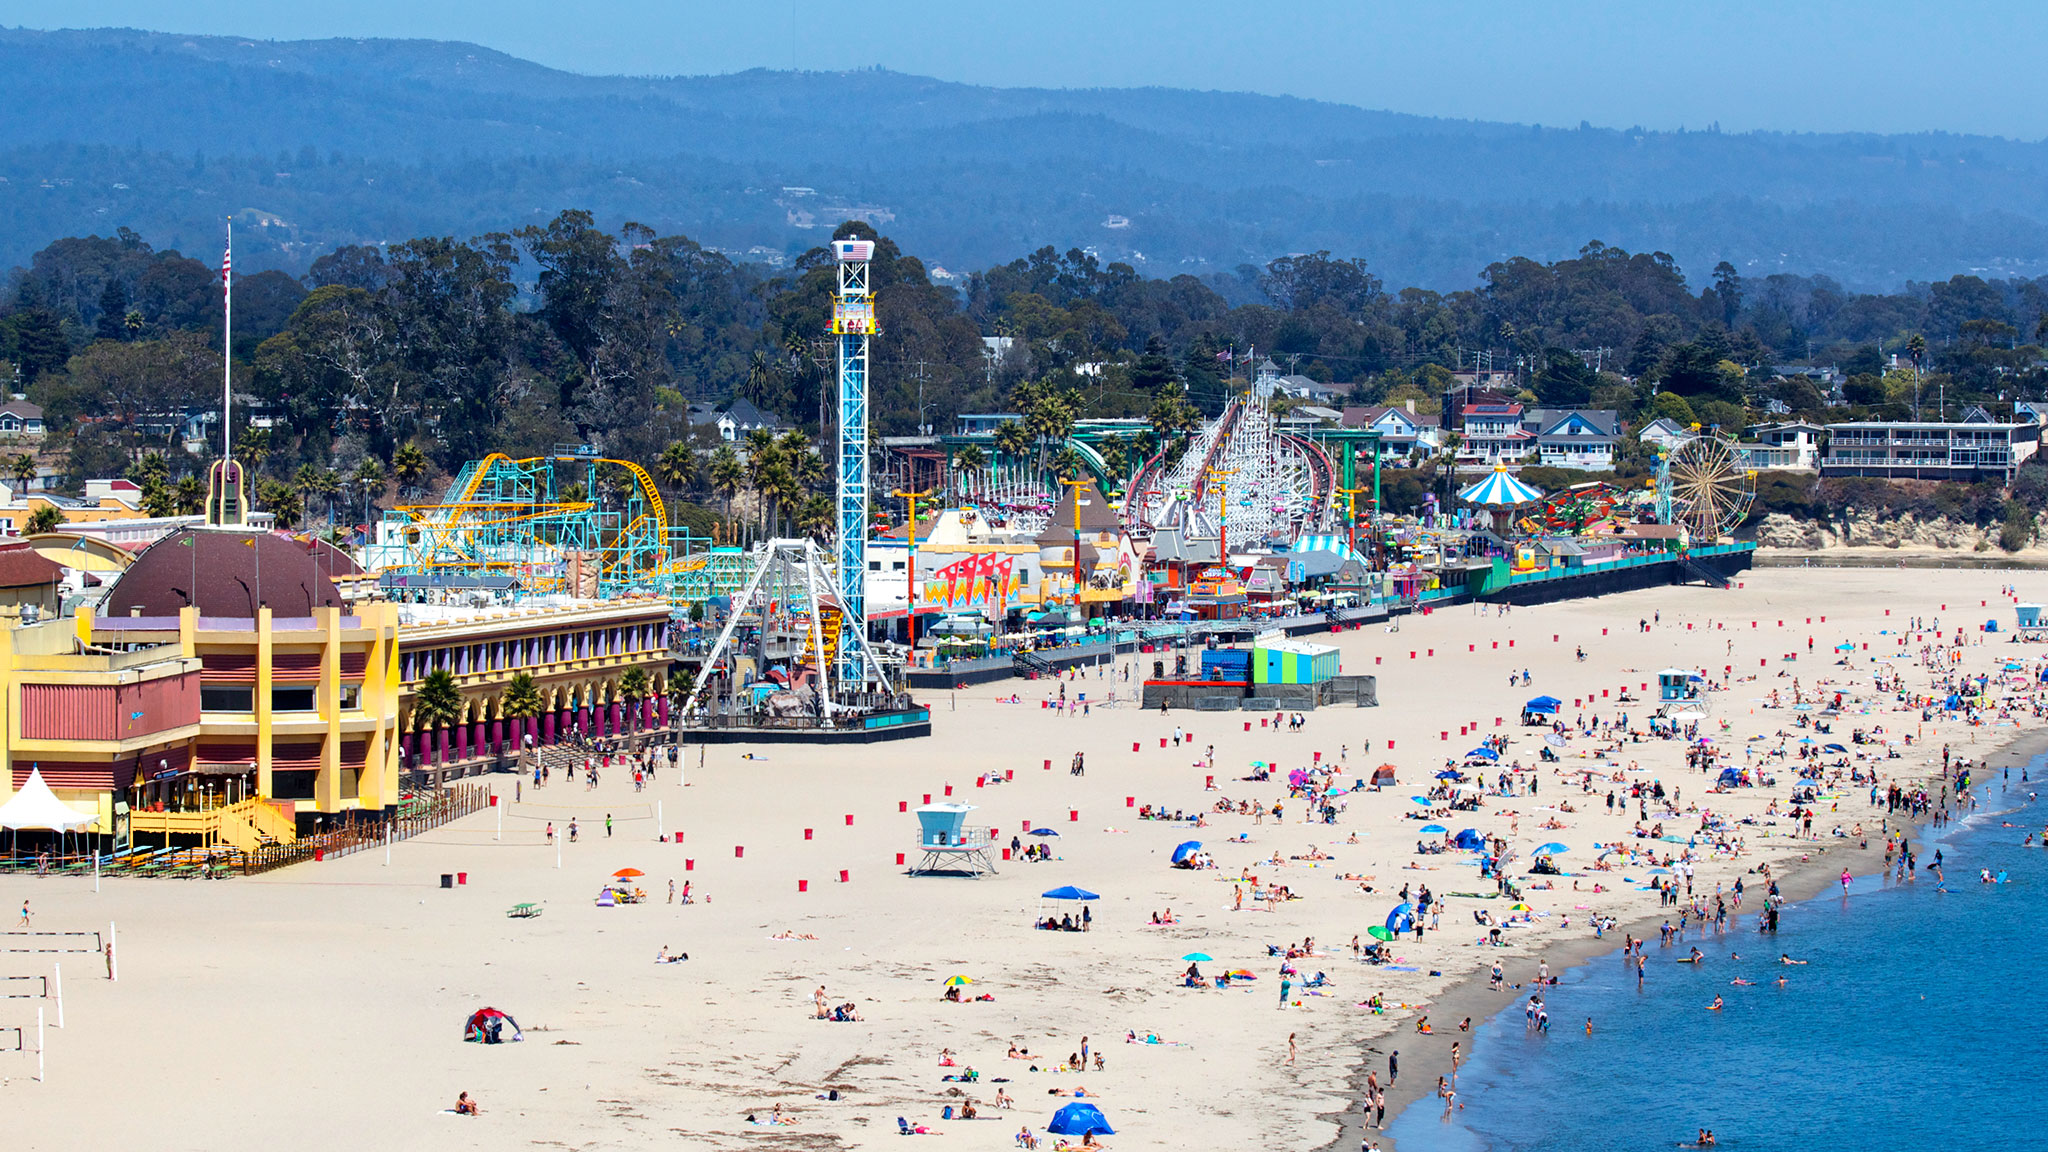 Santa Cruz Beach Boardwalk Amusement Park California's Classic Beach